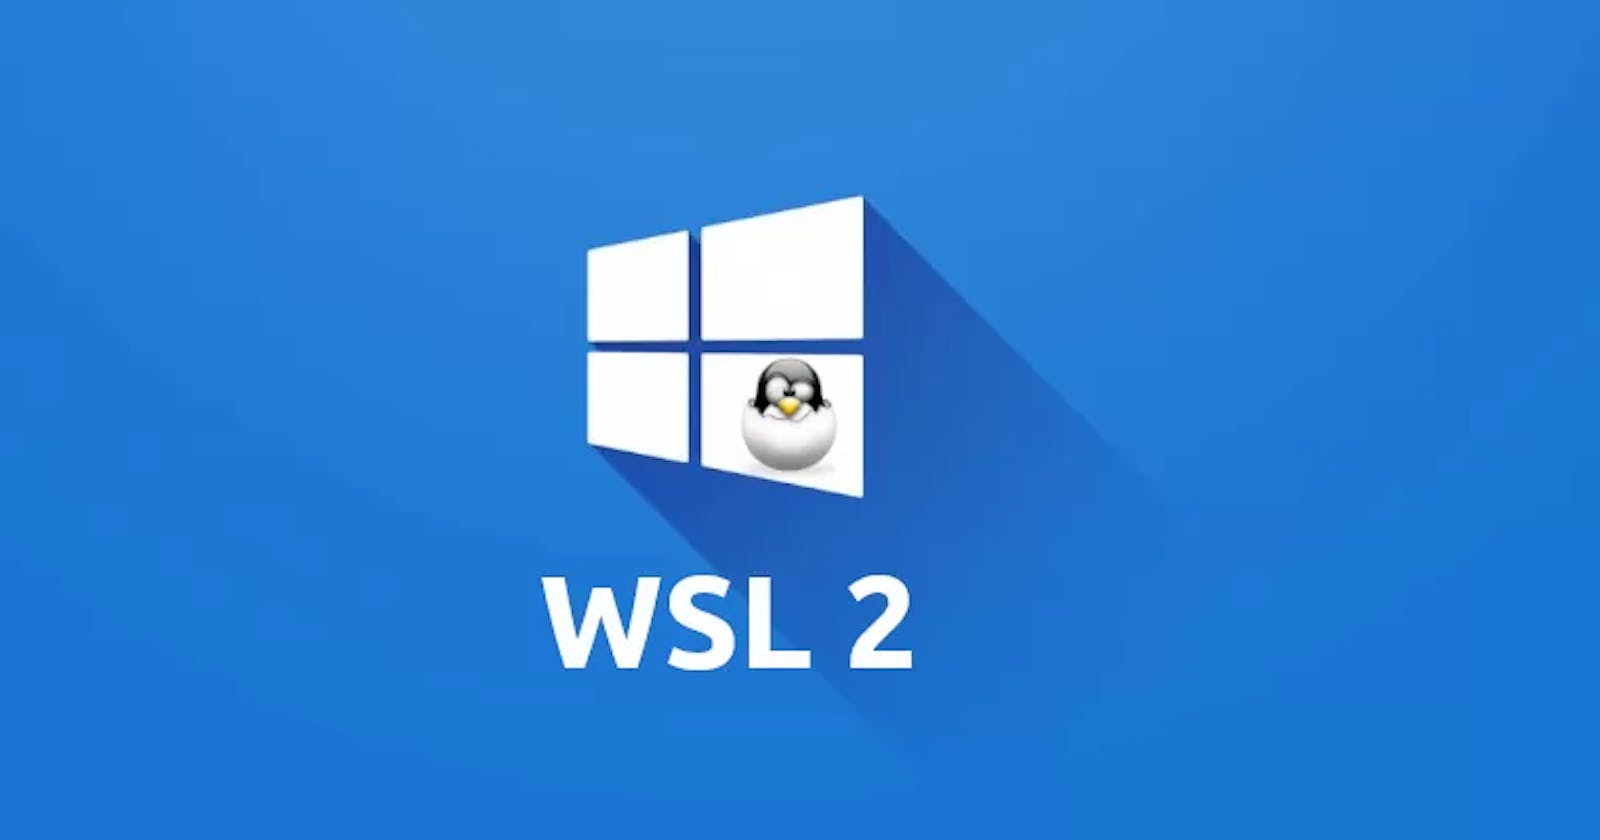 Installing WSL 2 with Ubuntu on Windows